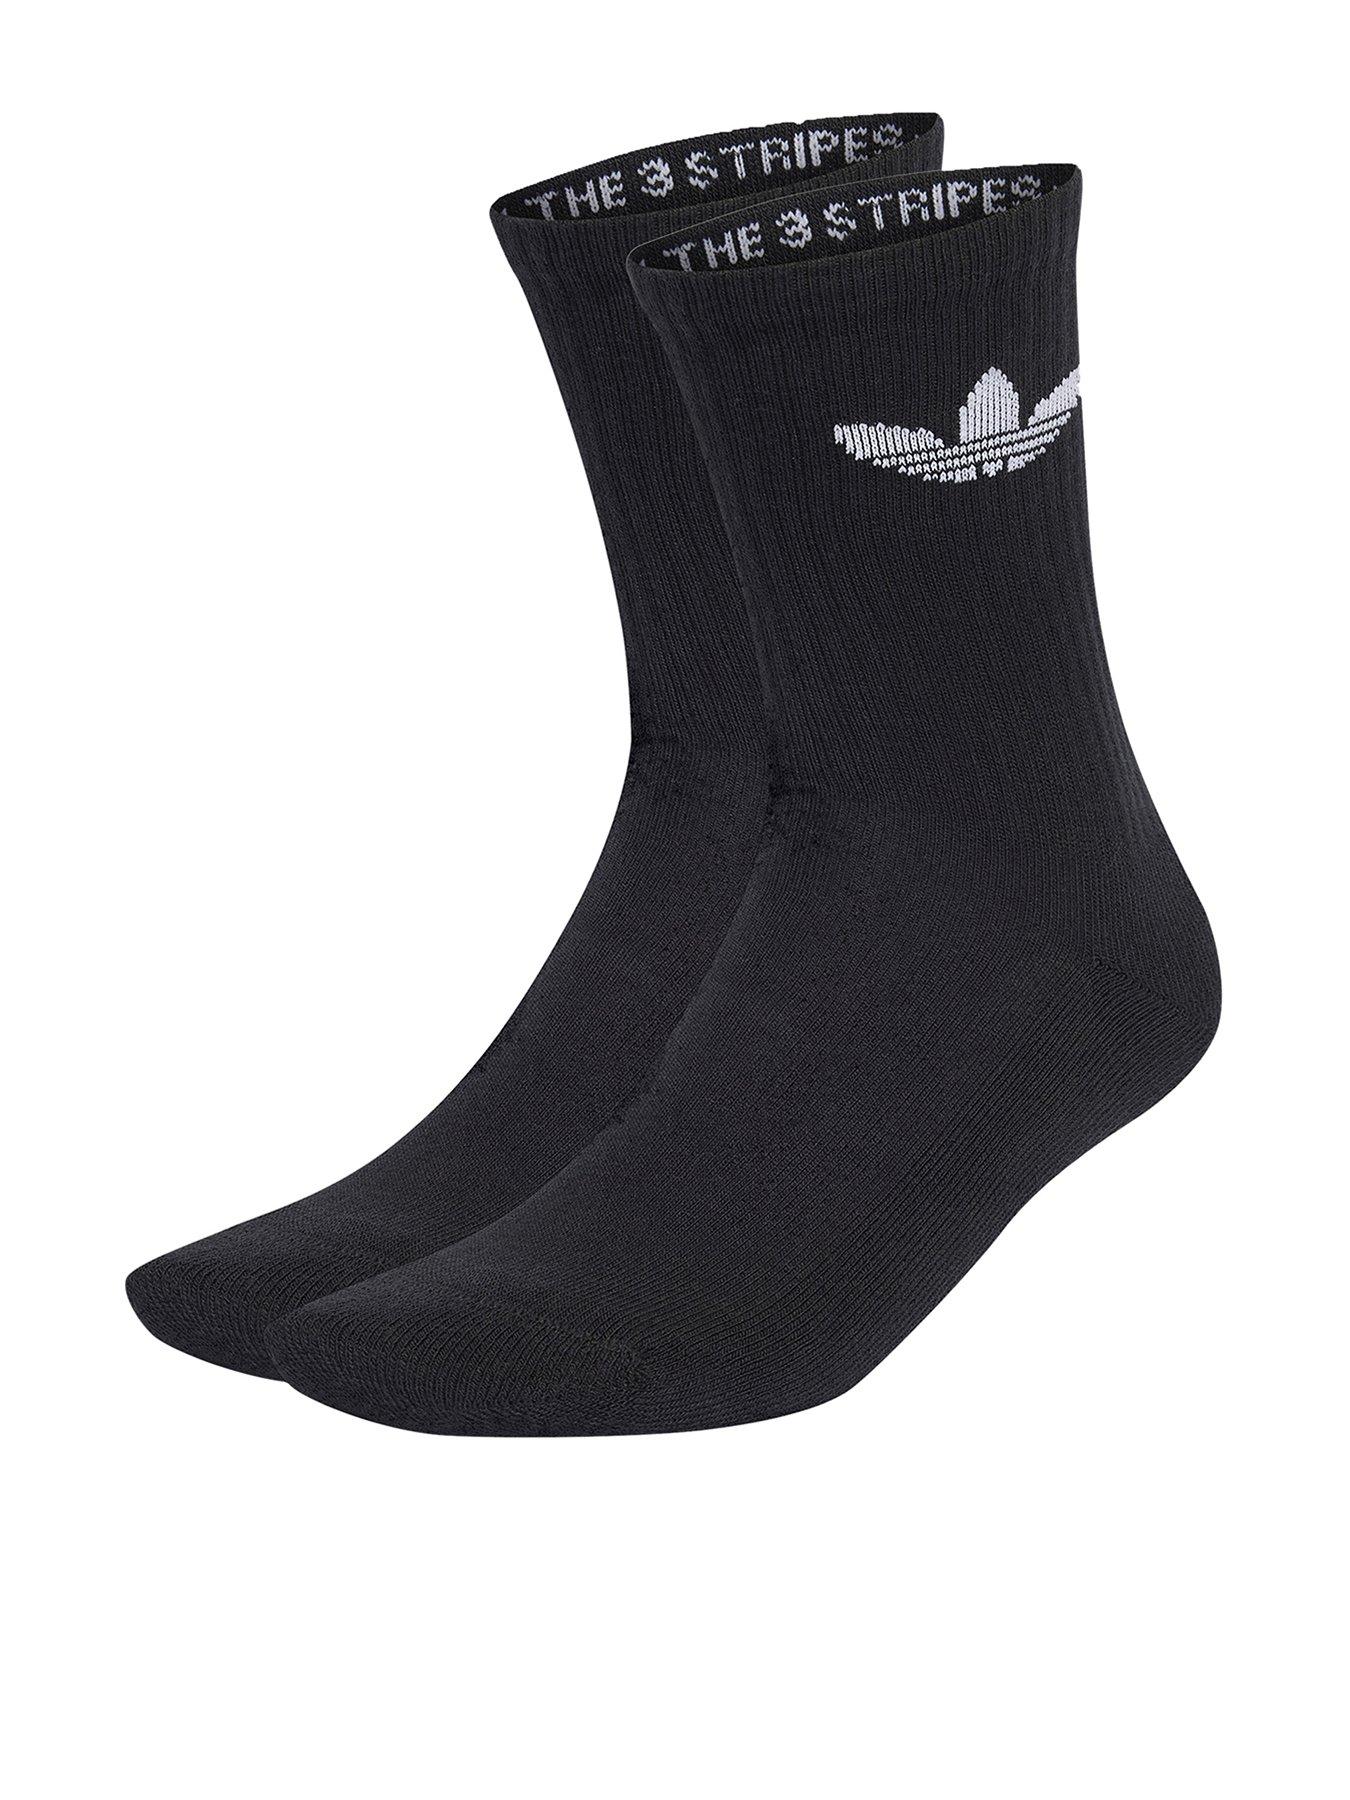 adidas Originals Unisex 3 Pack Trefoil Crew Cushion Socks - Black, Black, Size 2Xl, Men